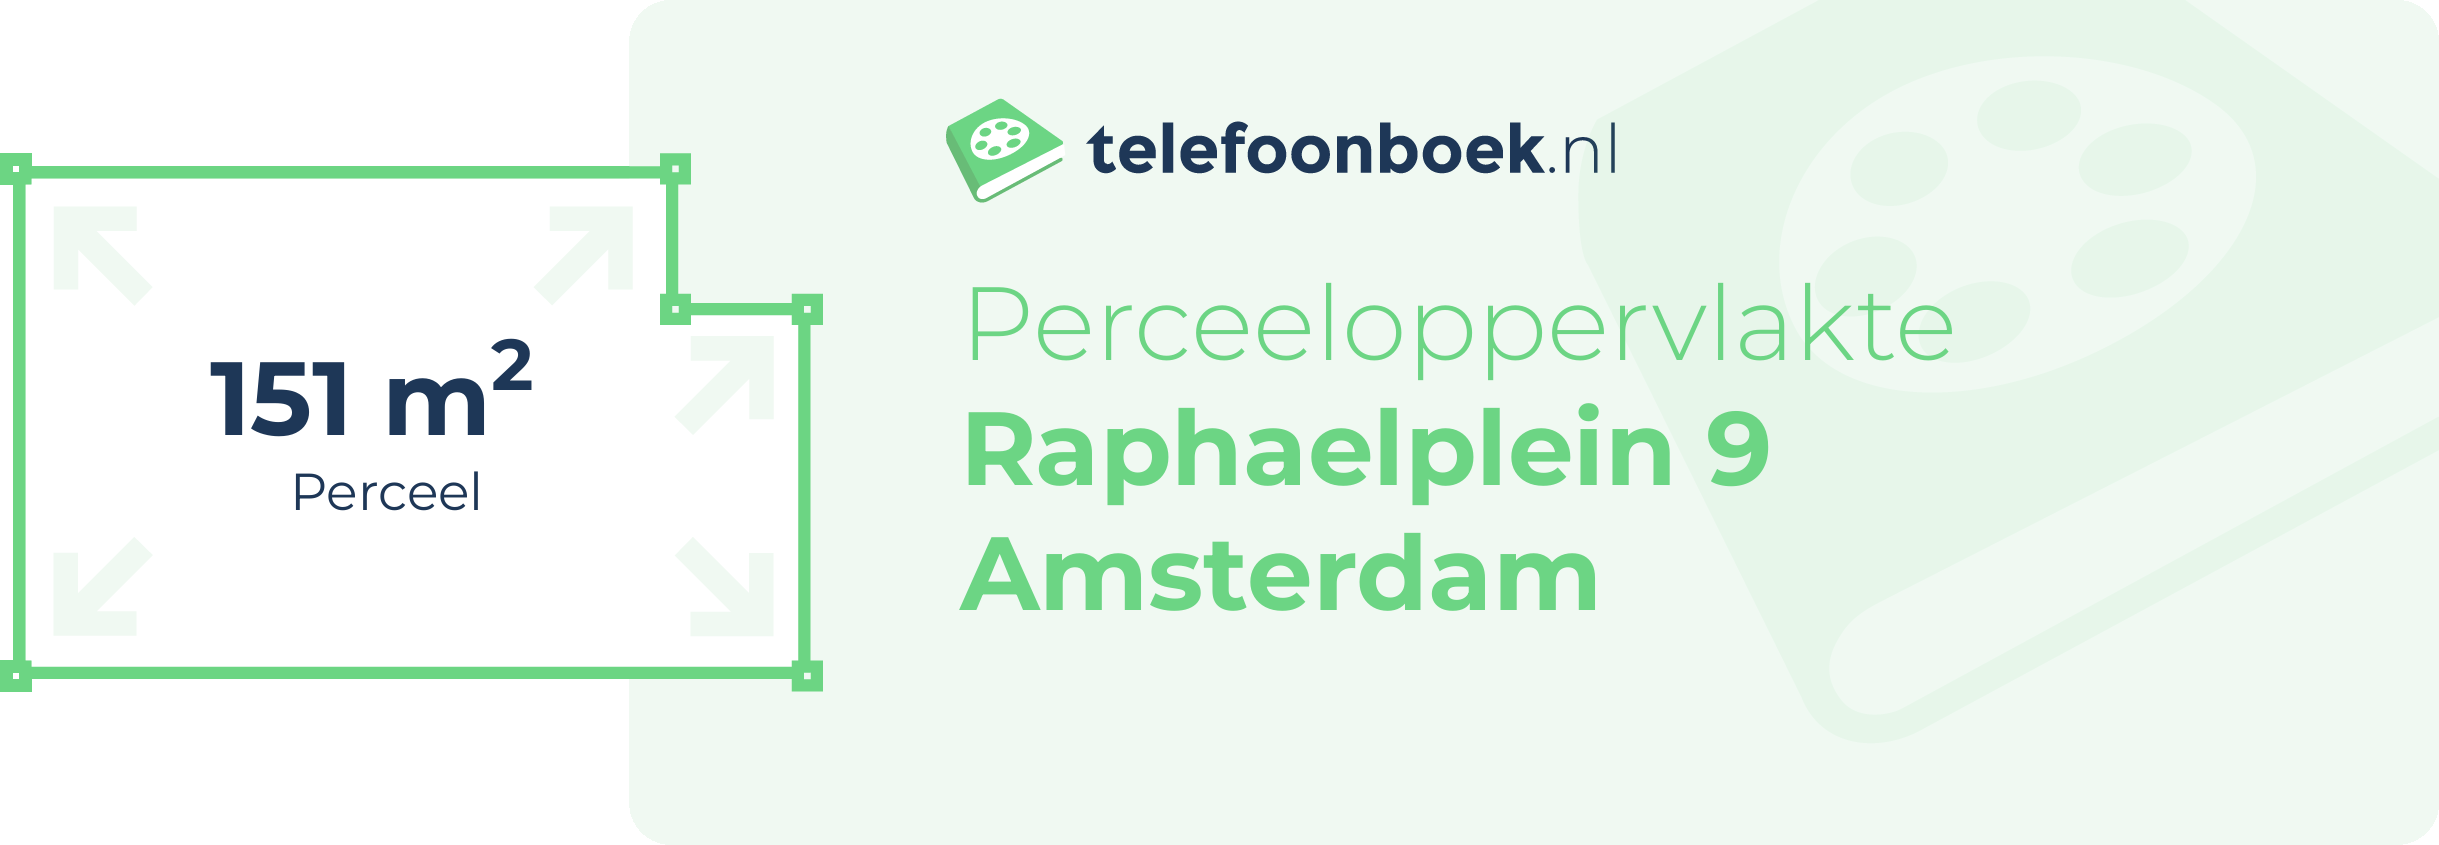 Perceeloppervlakte Raphaelplein 9 Amsterdam